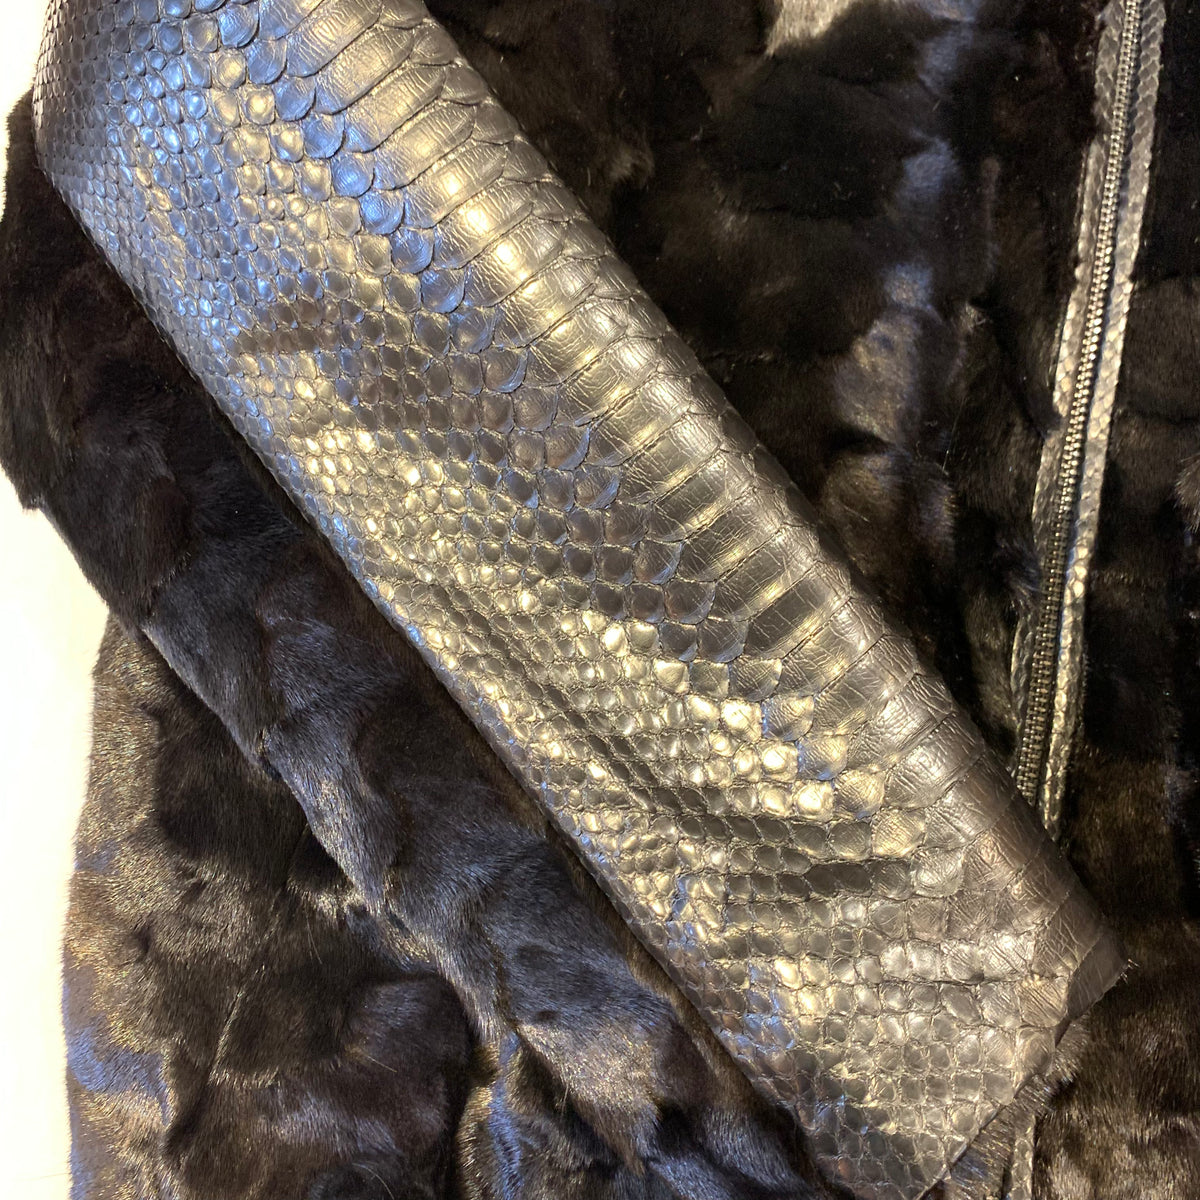 Kashani Black Natural Python Silver Fox Mink Fur Coat - Dudes Boutique